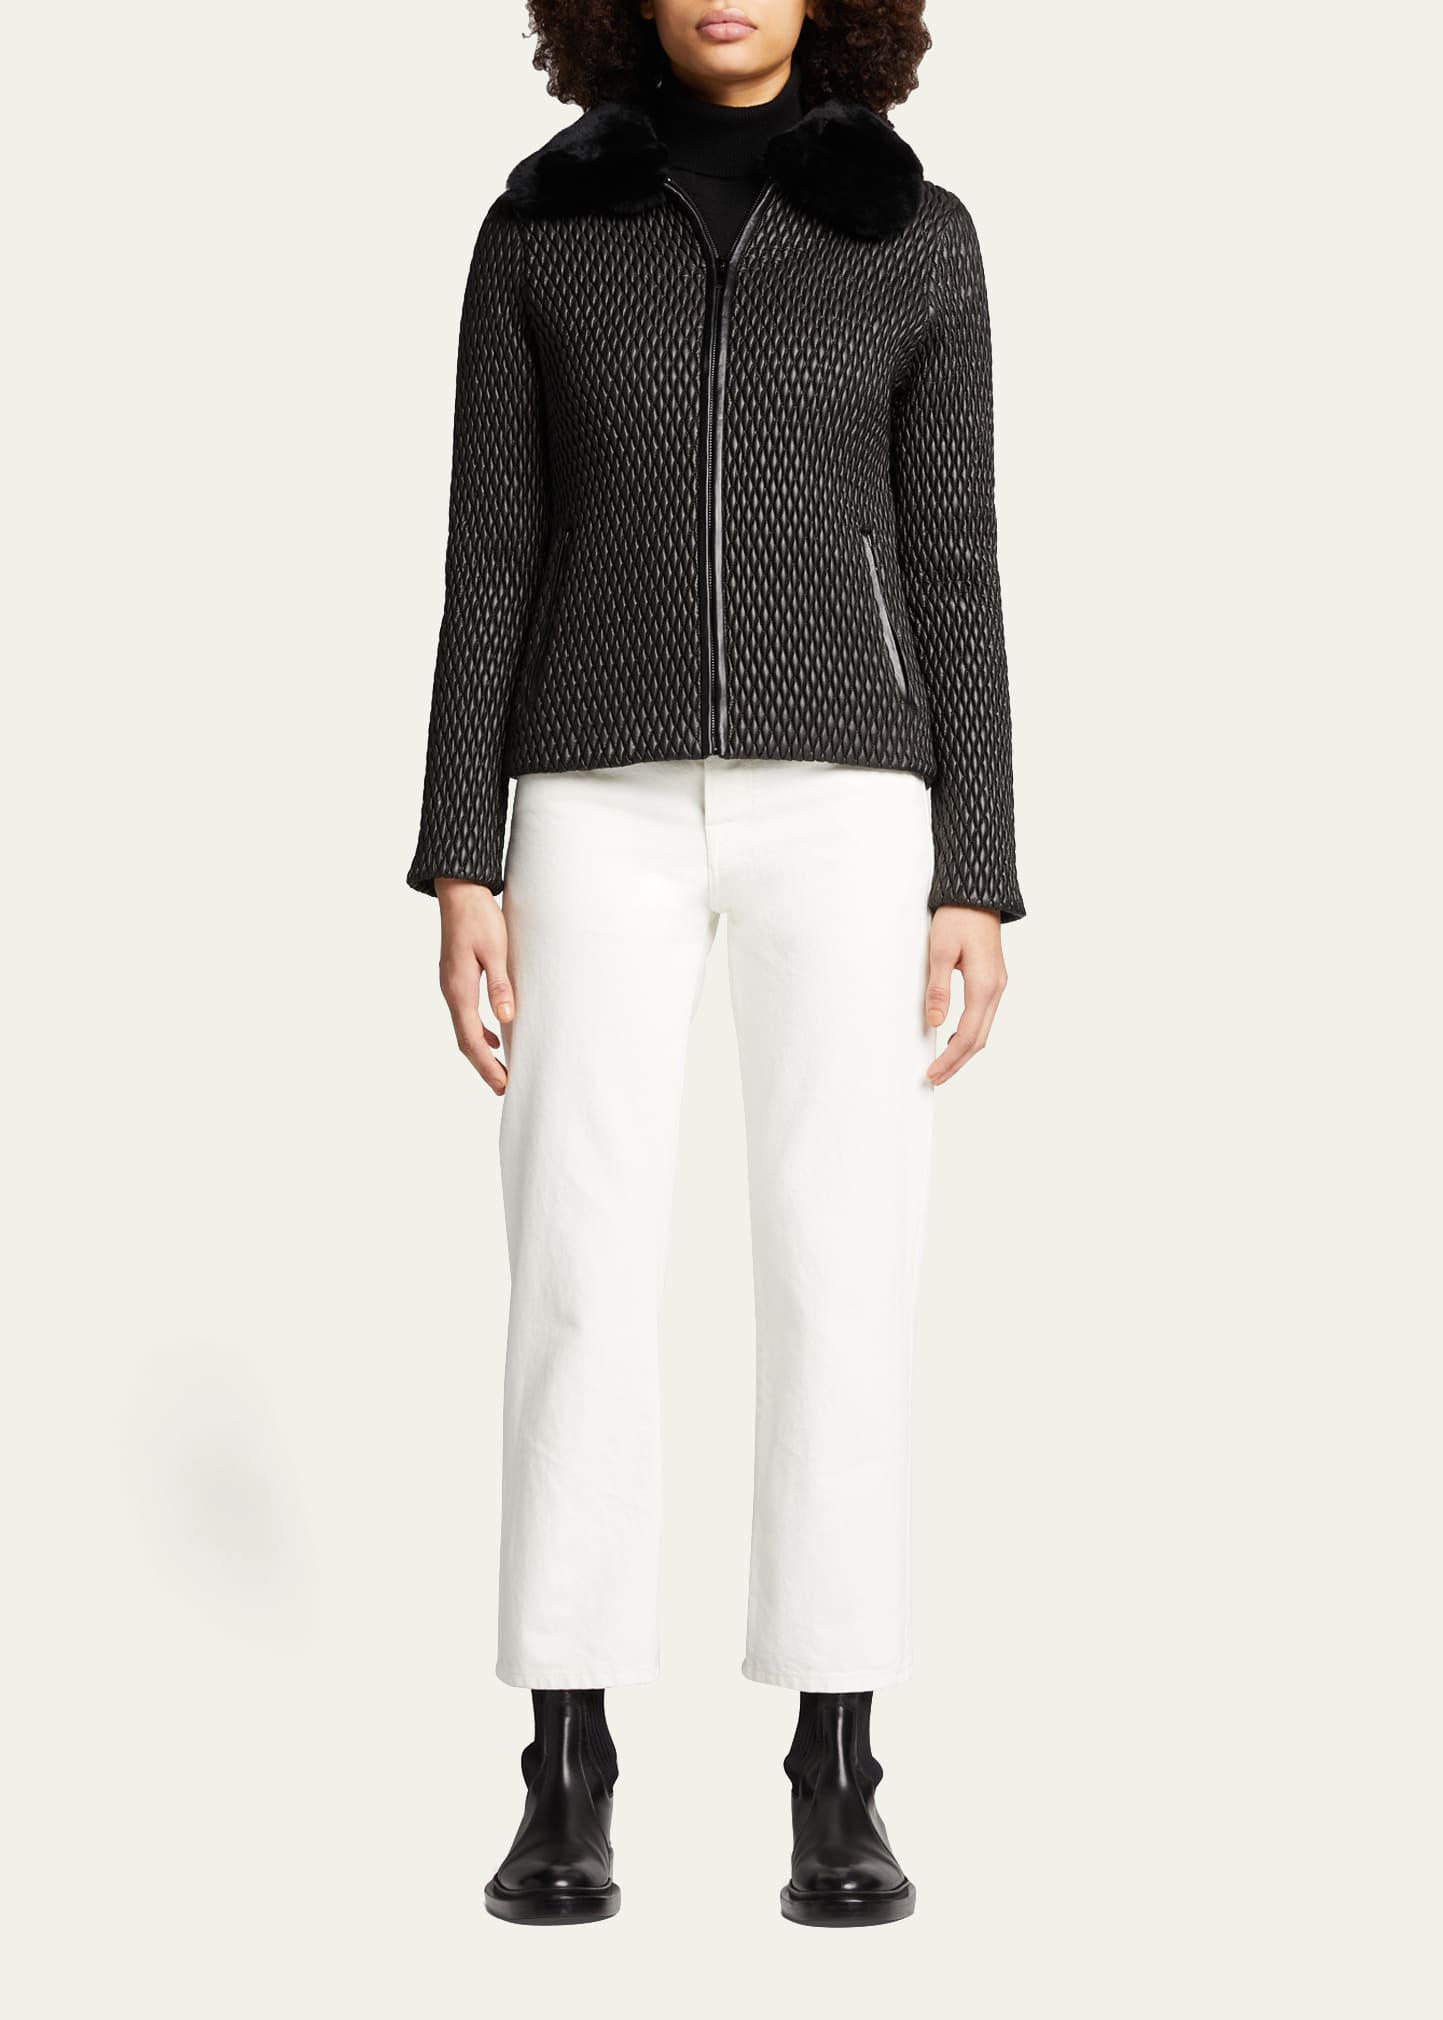 Kelli Kouri Quilted Vegan Leather Jacket w/ Fur Collar